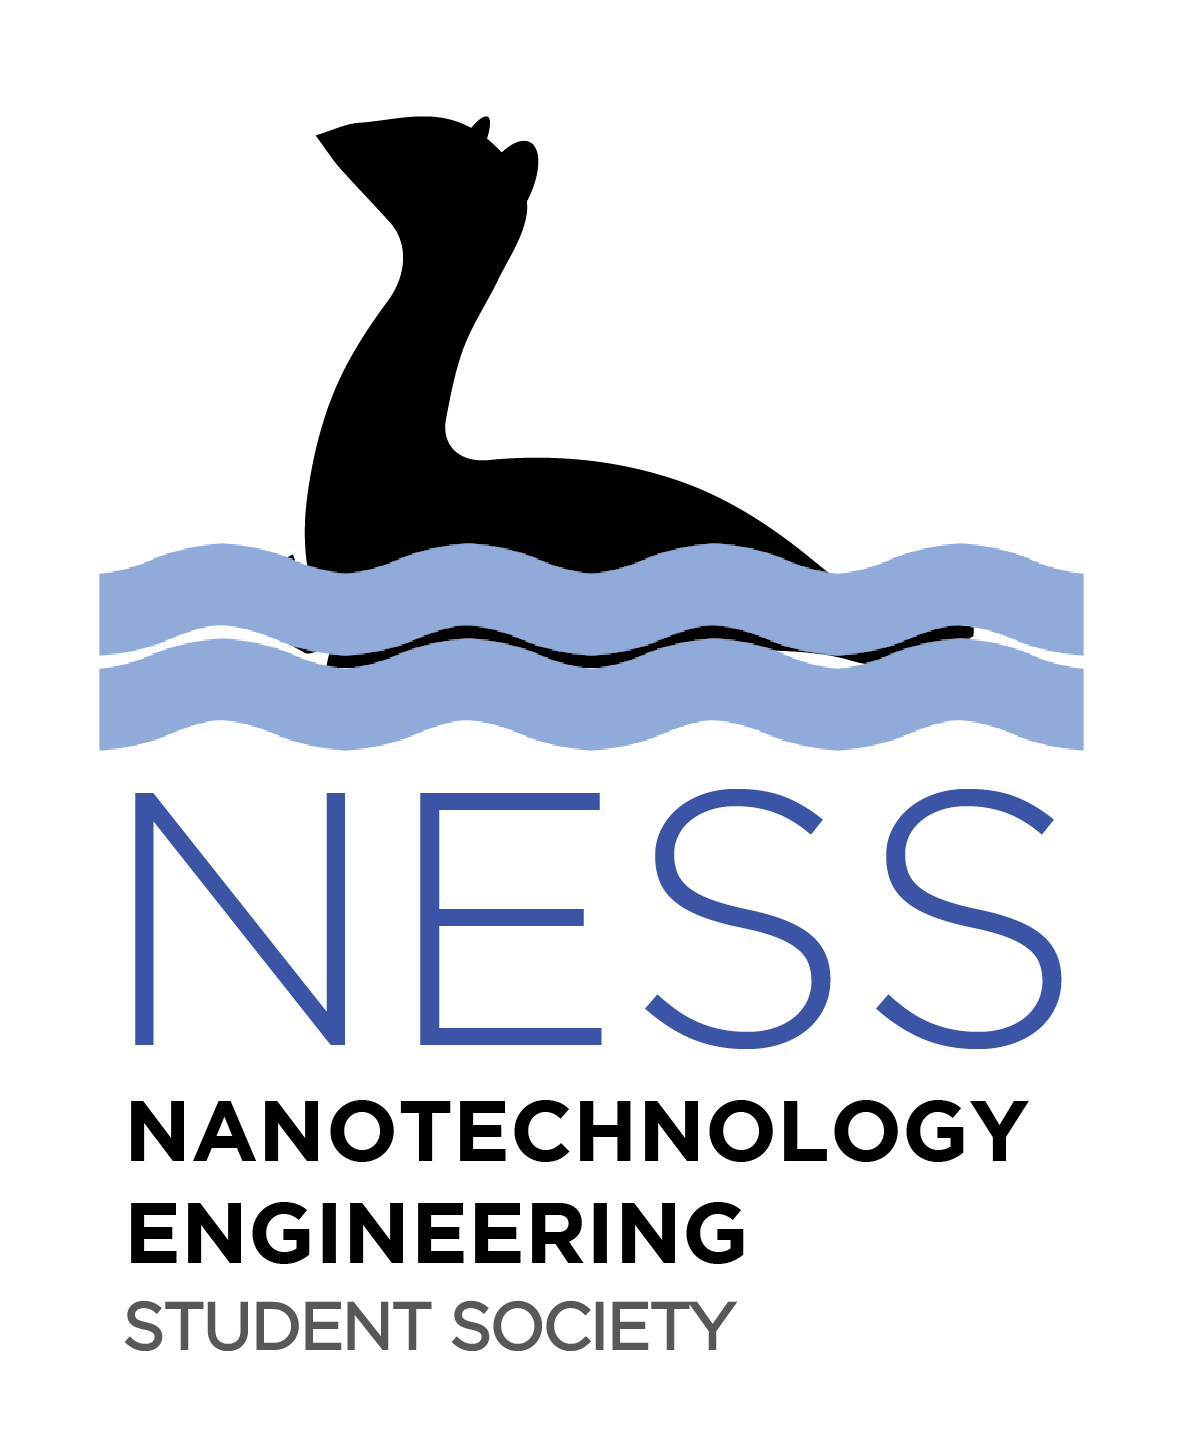 Nanotechnology Engineering Student Society